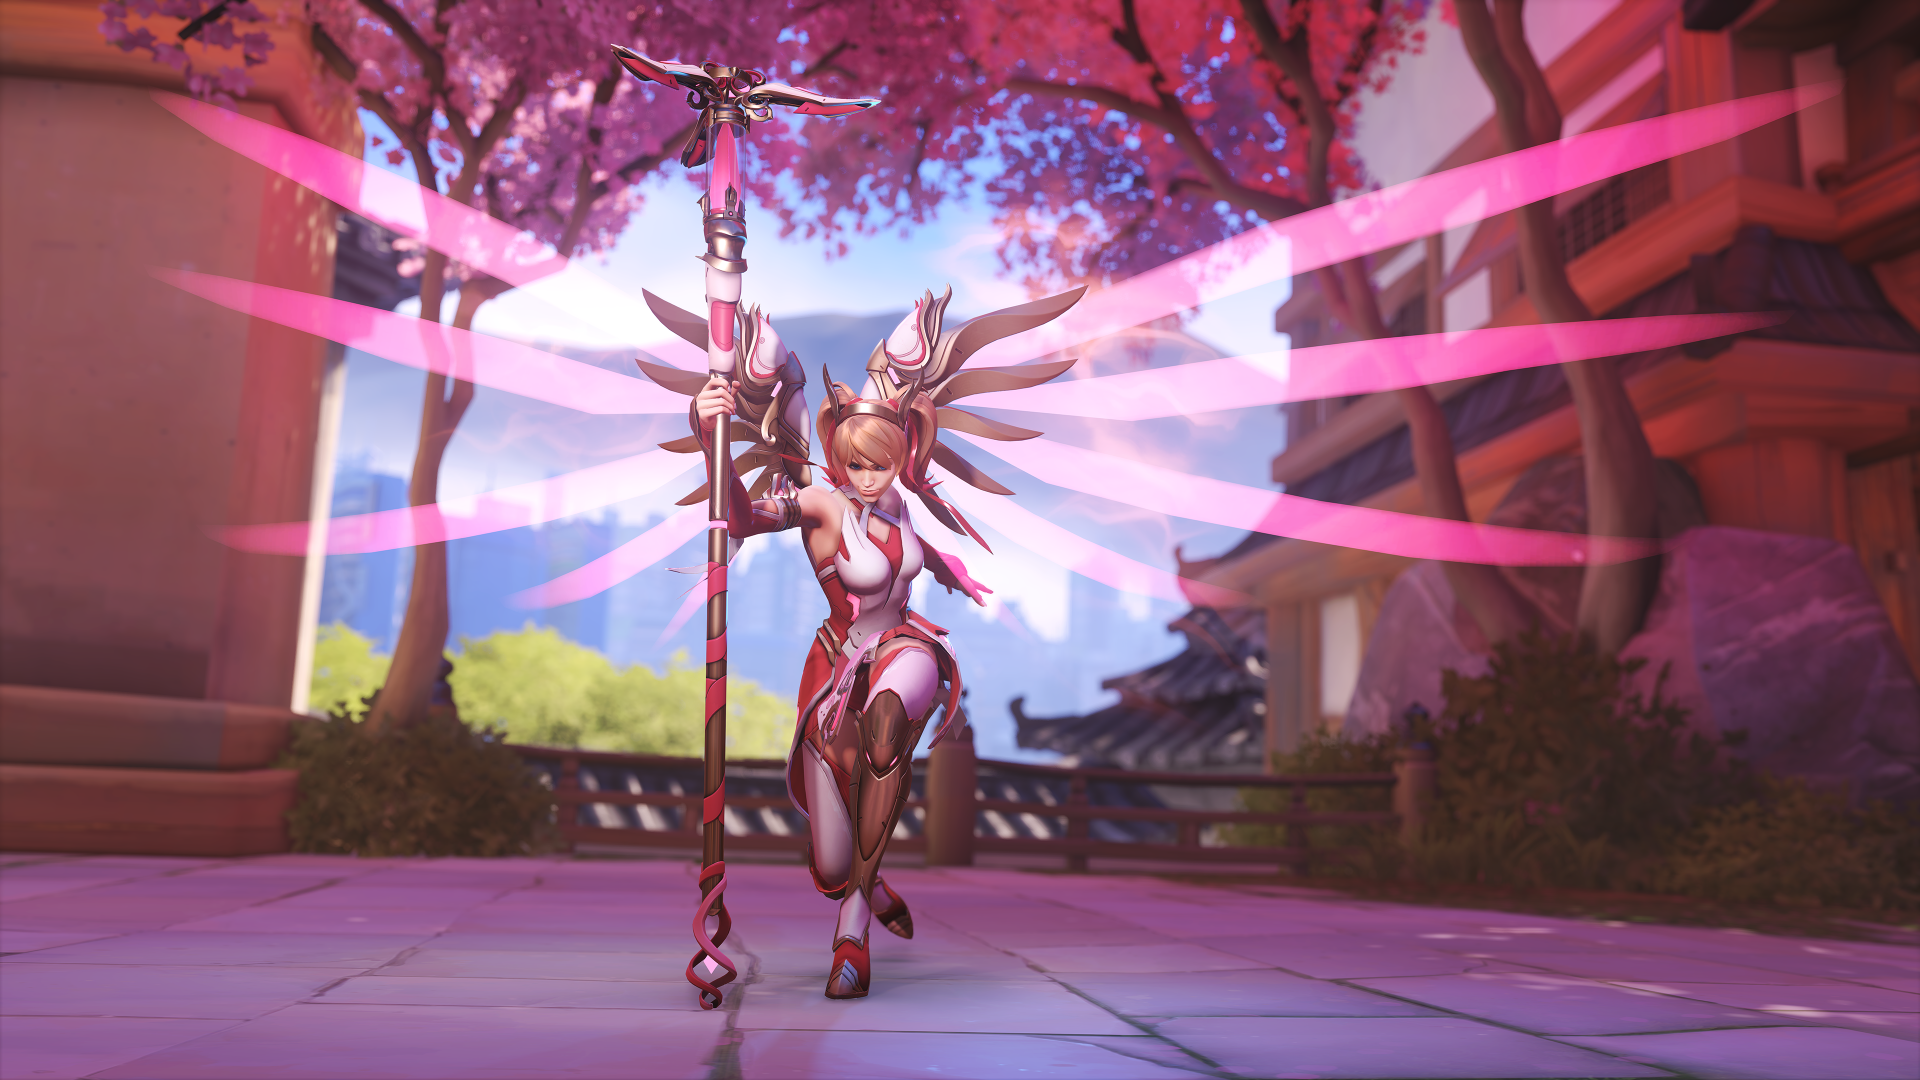 Overwatch 2 Pink Mercy skin with bright background